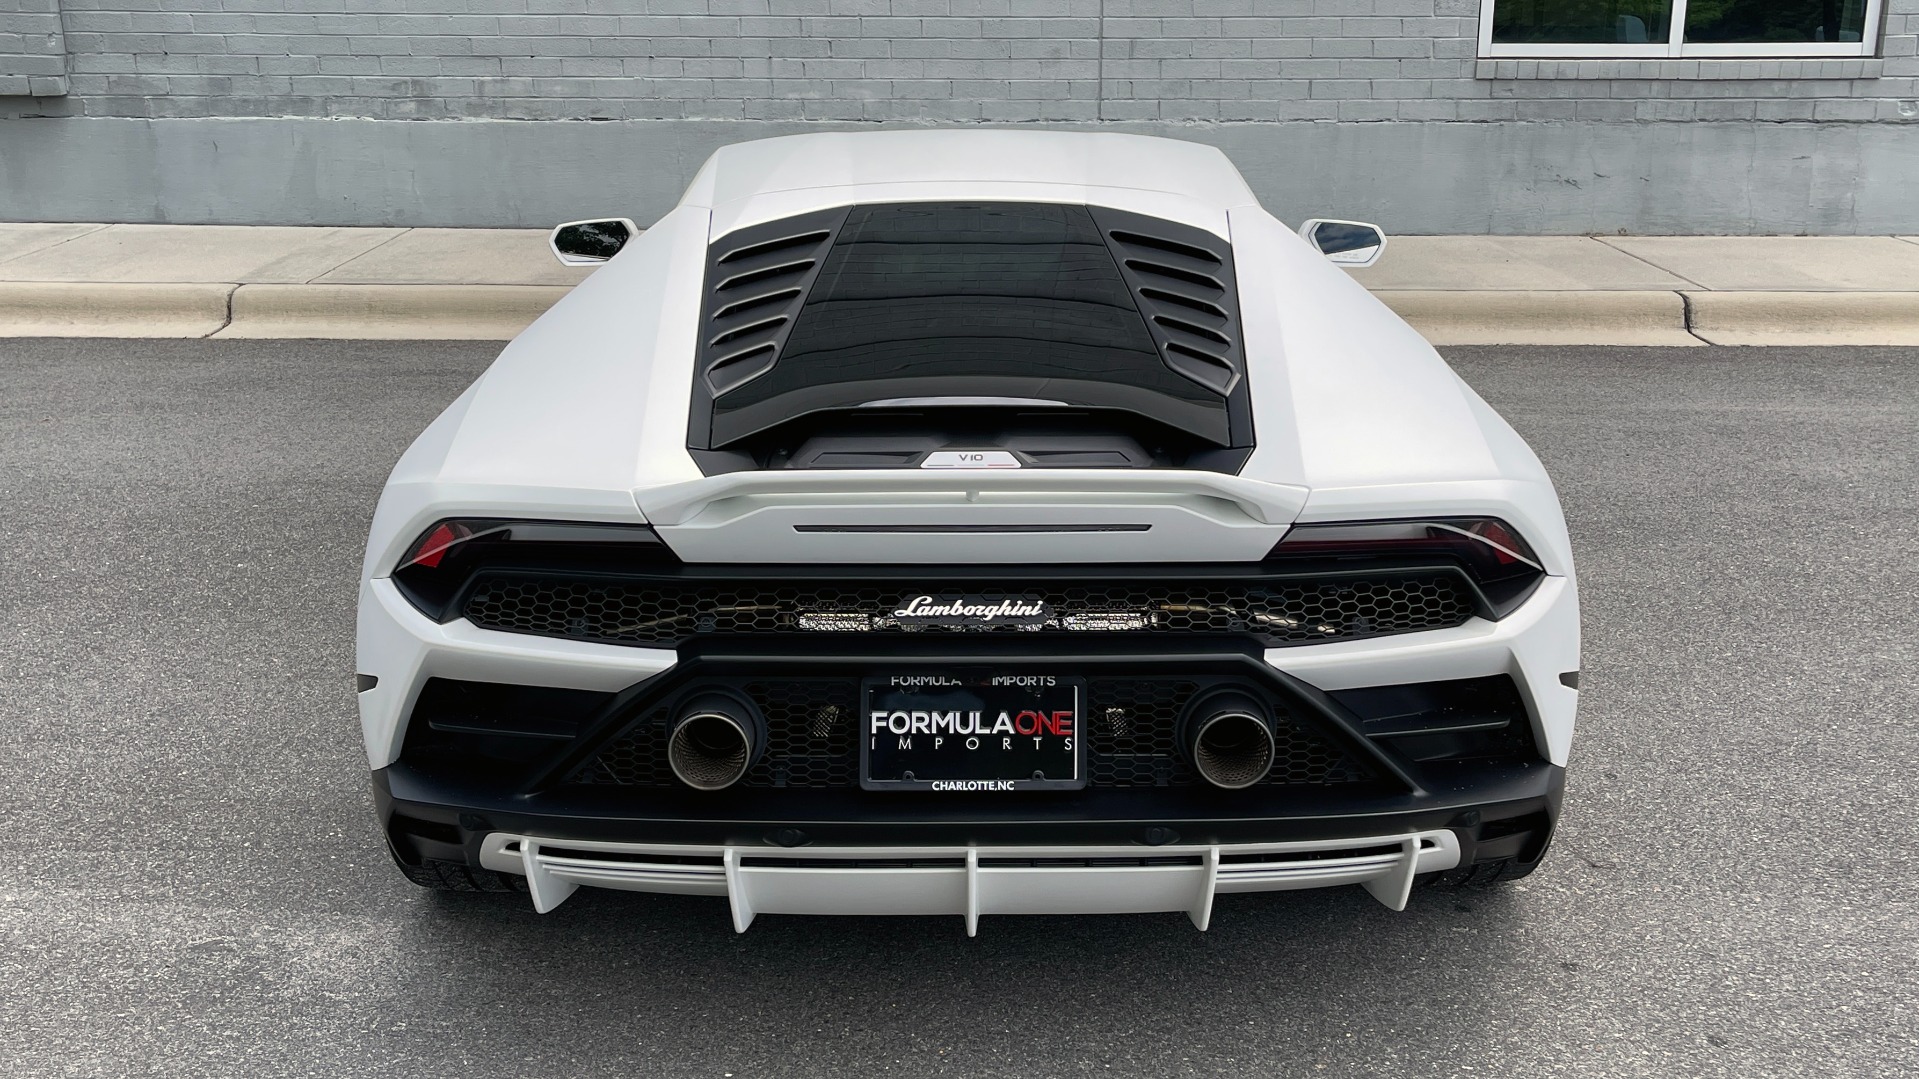 Used 2020 Lamborghini HURACAN EVO LP640-4 5.2L V10 630HP / 7-SPD AUTO / AWD / NAVIGATION / CAMERA for sale $325,000 at Formula Imports in Charlotte NC 28227 11